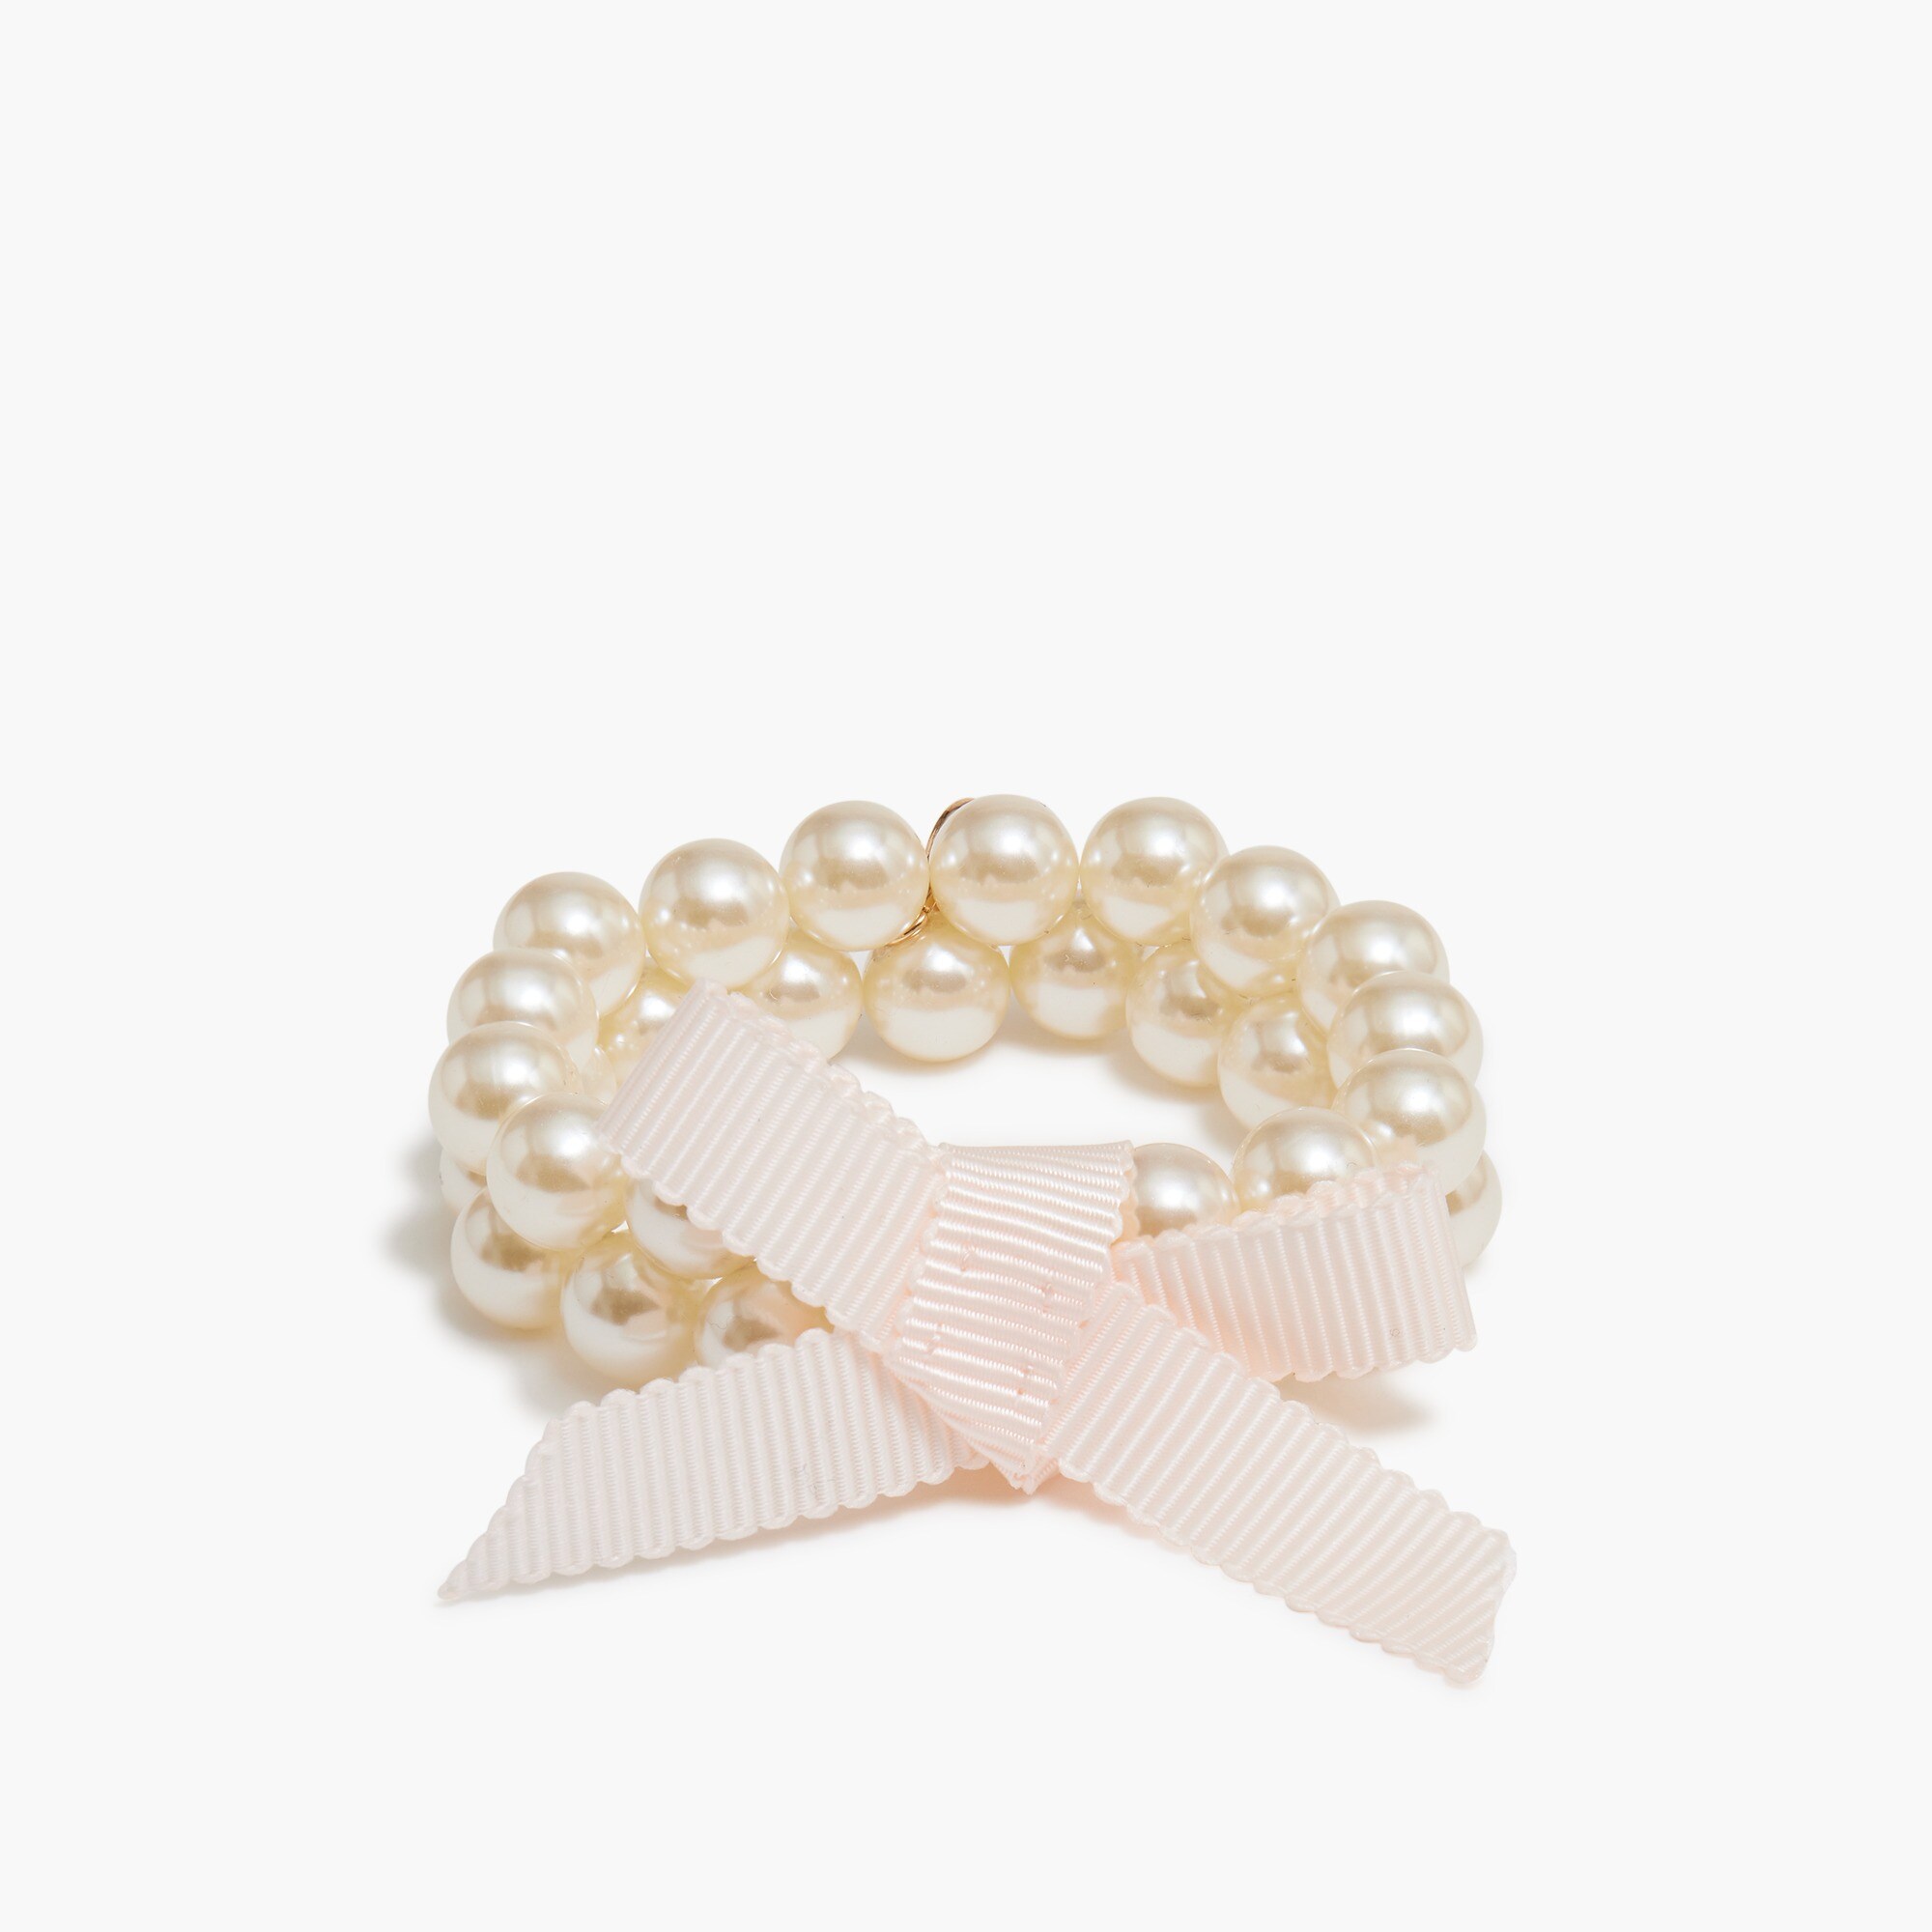  Girls' pearl bracelet